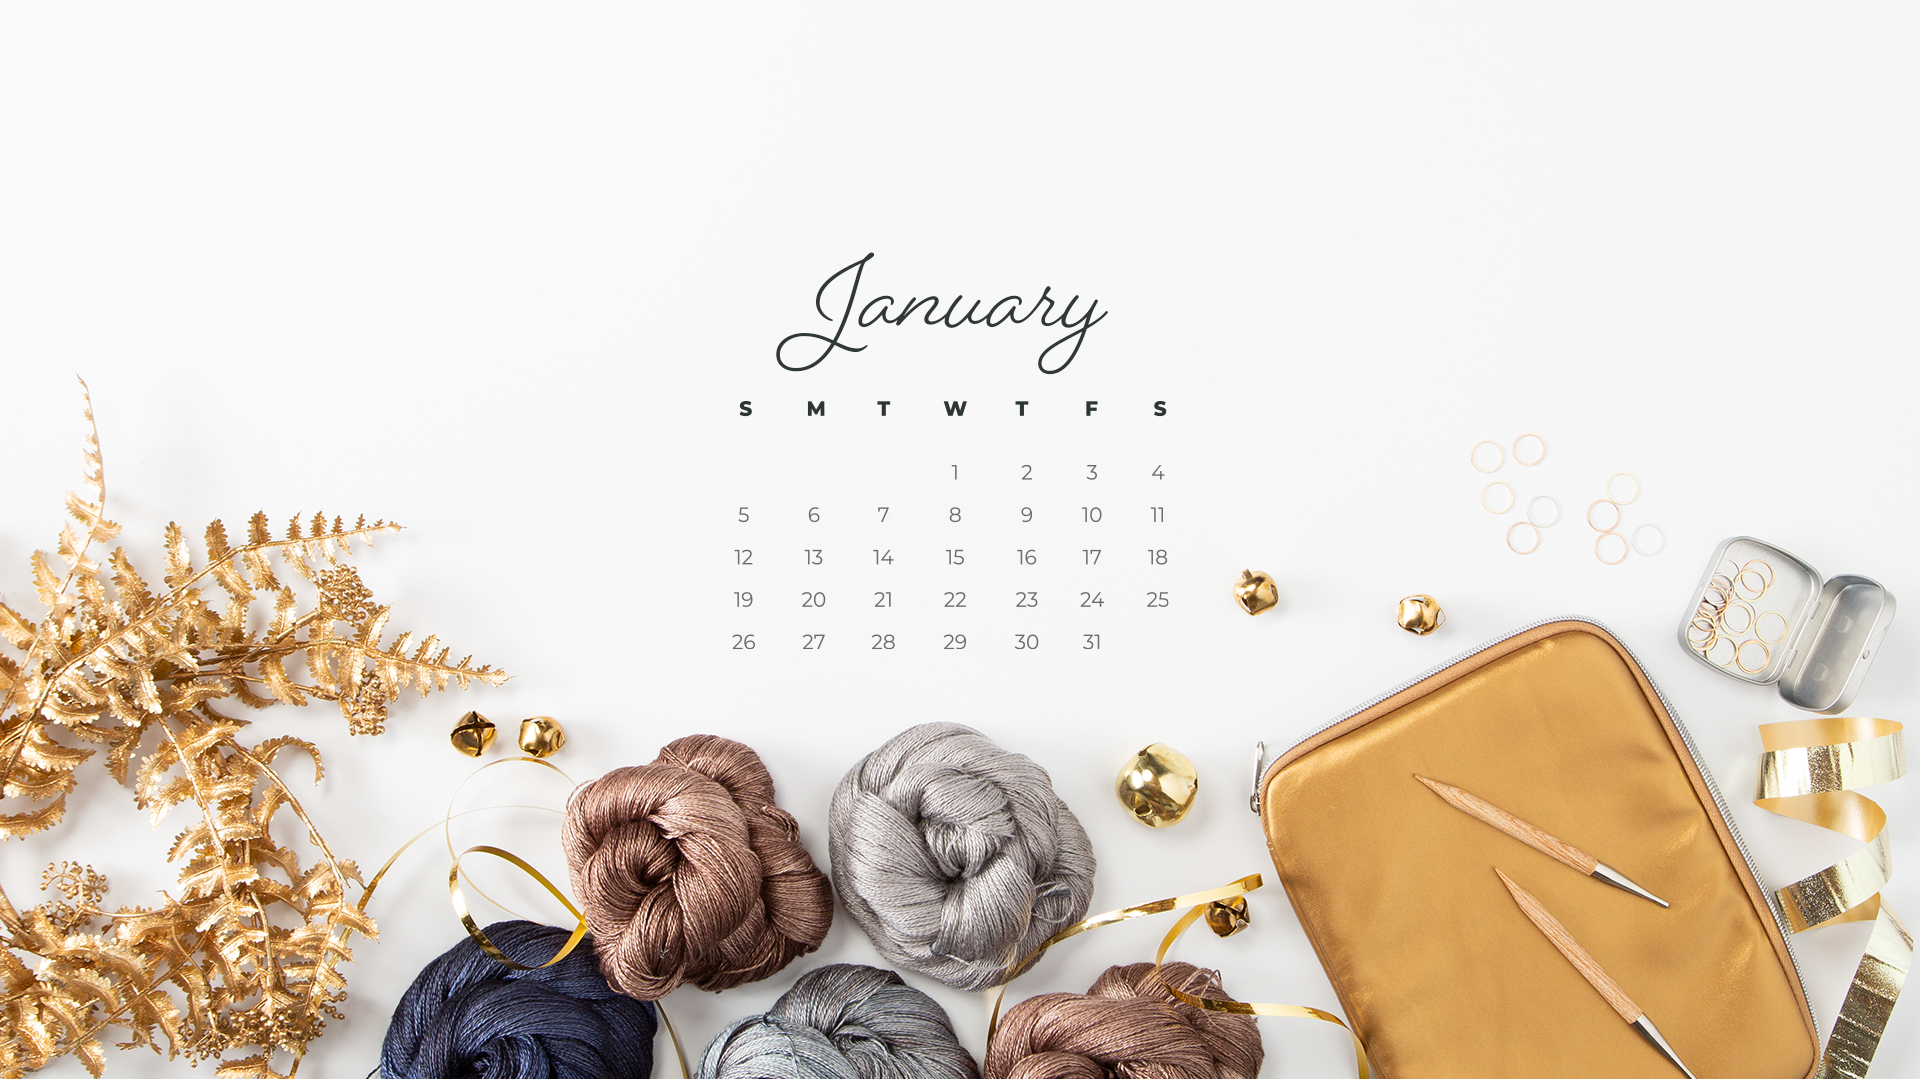 Free Downloadable January Calendar - The Knit Picks Staff Knitting Blog